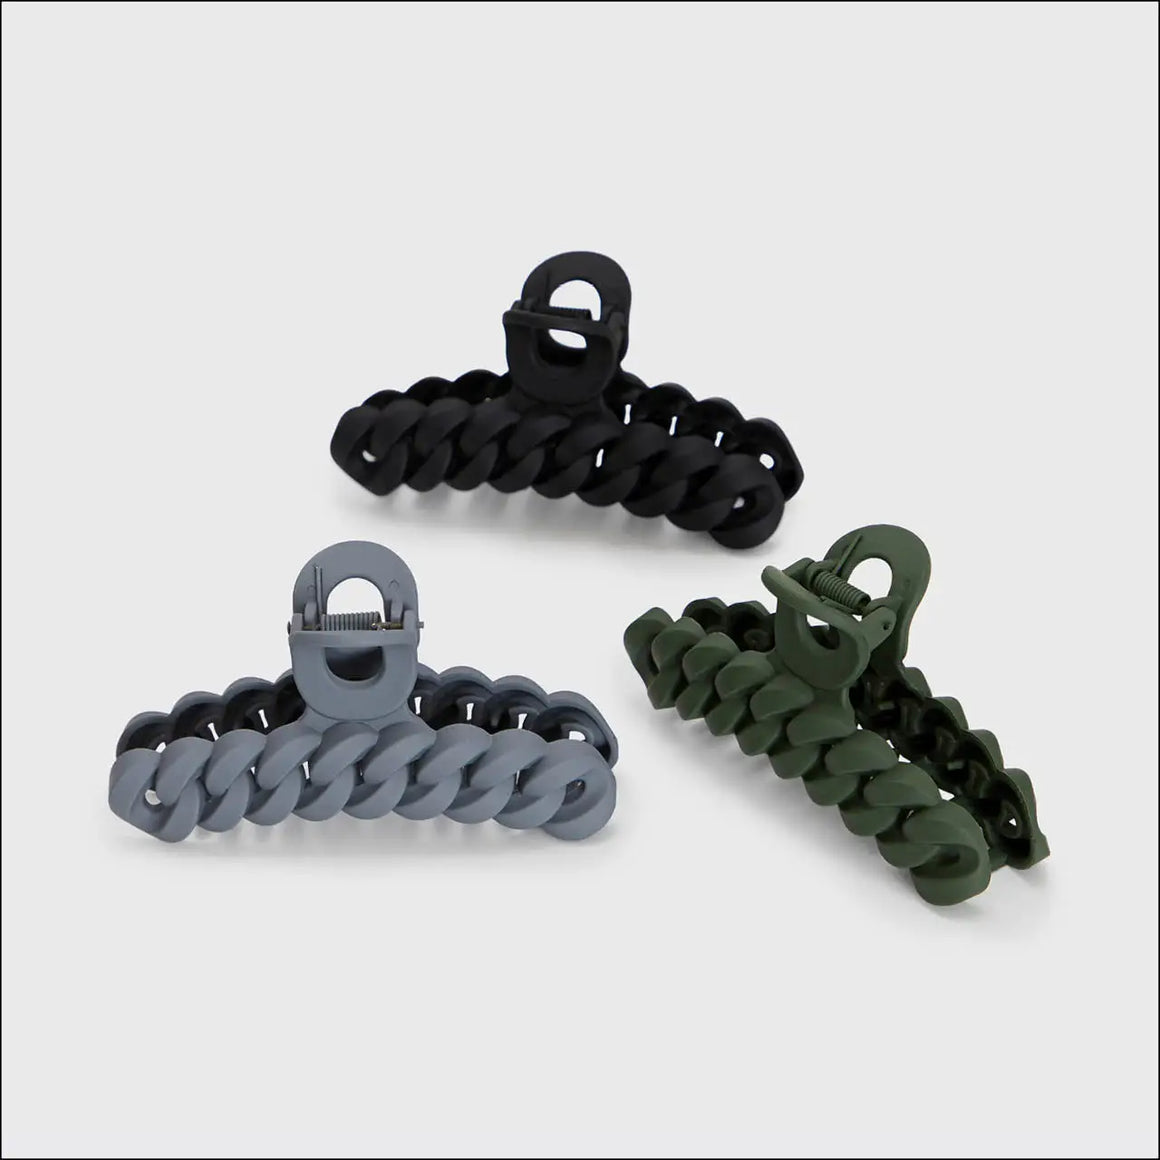 Kitsch | Eco-friendly Chain Claw Clip 3pc Set